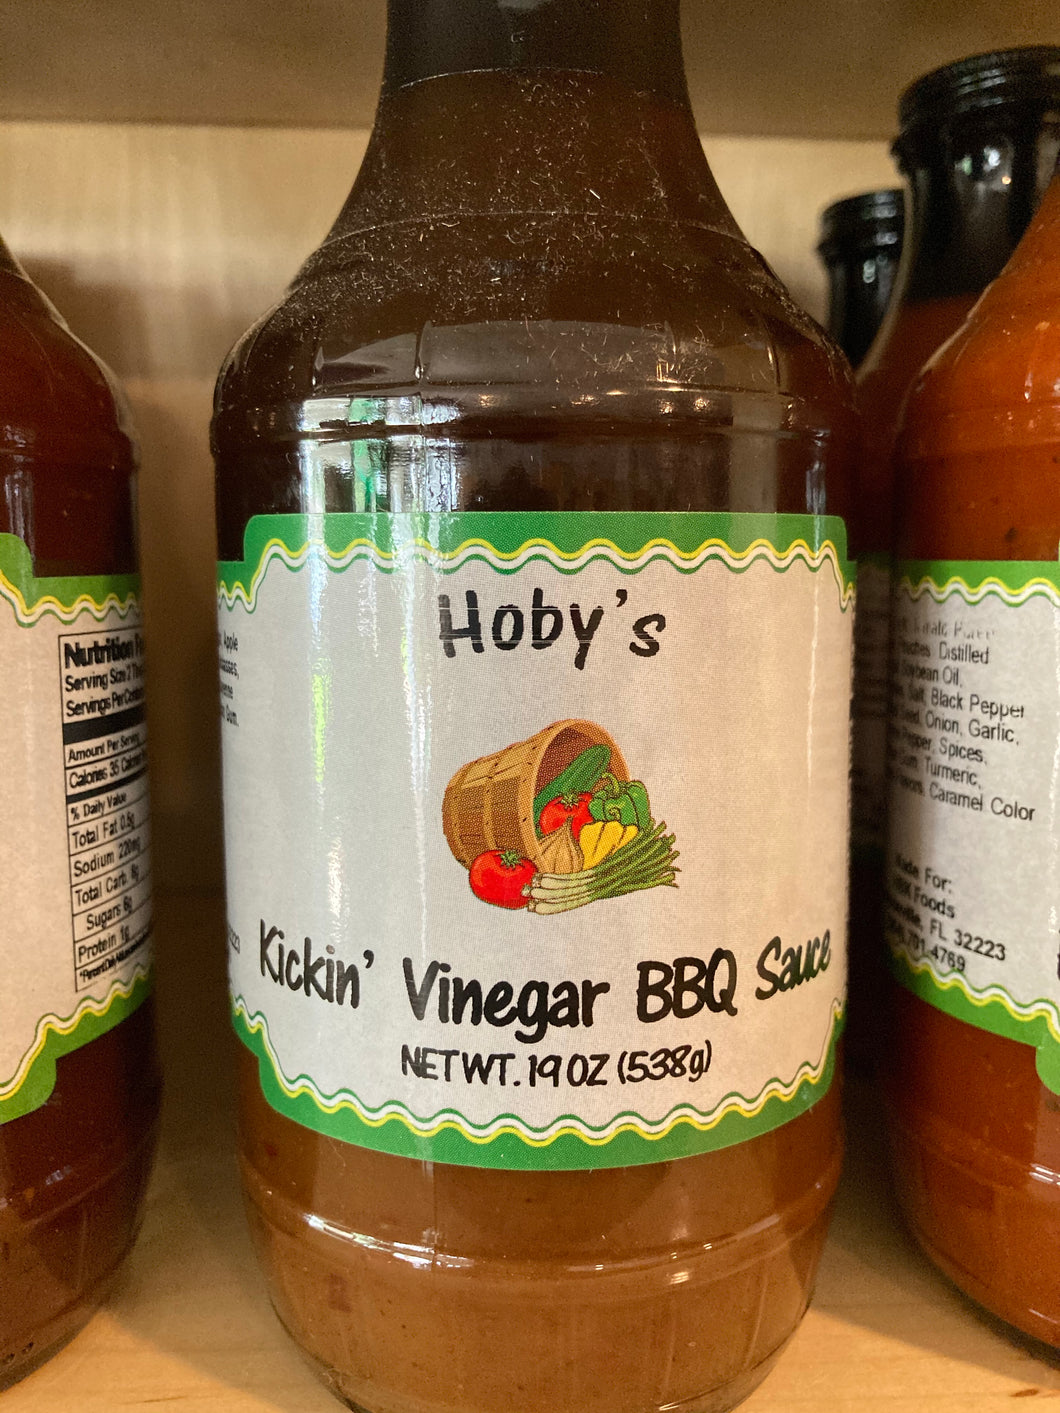 Kickin’ Vinegar BBQ Sauce from Hoby’s